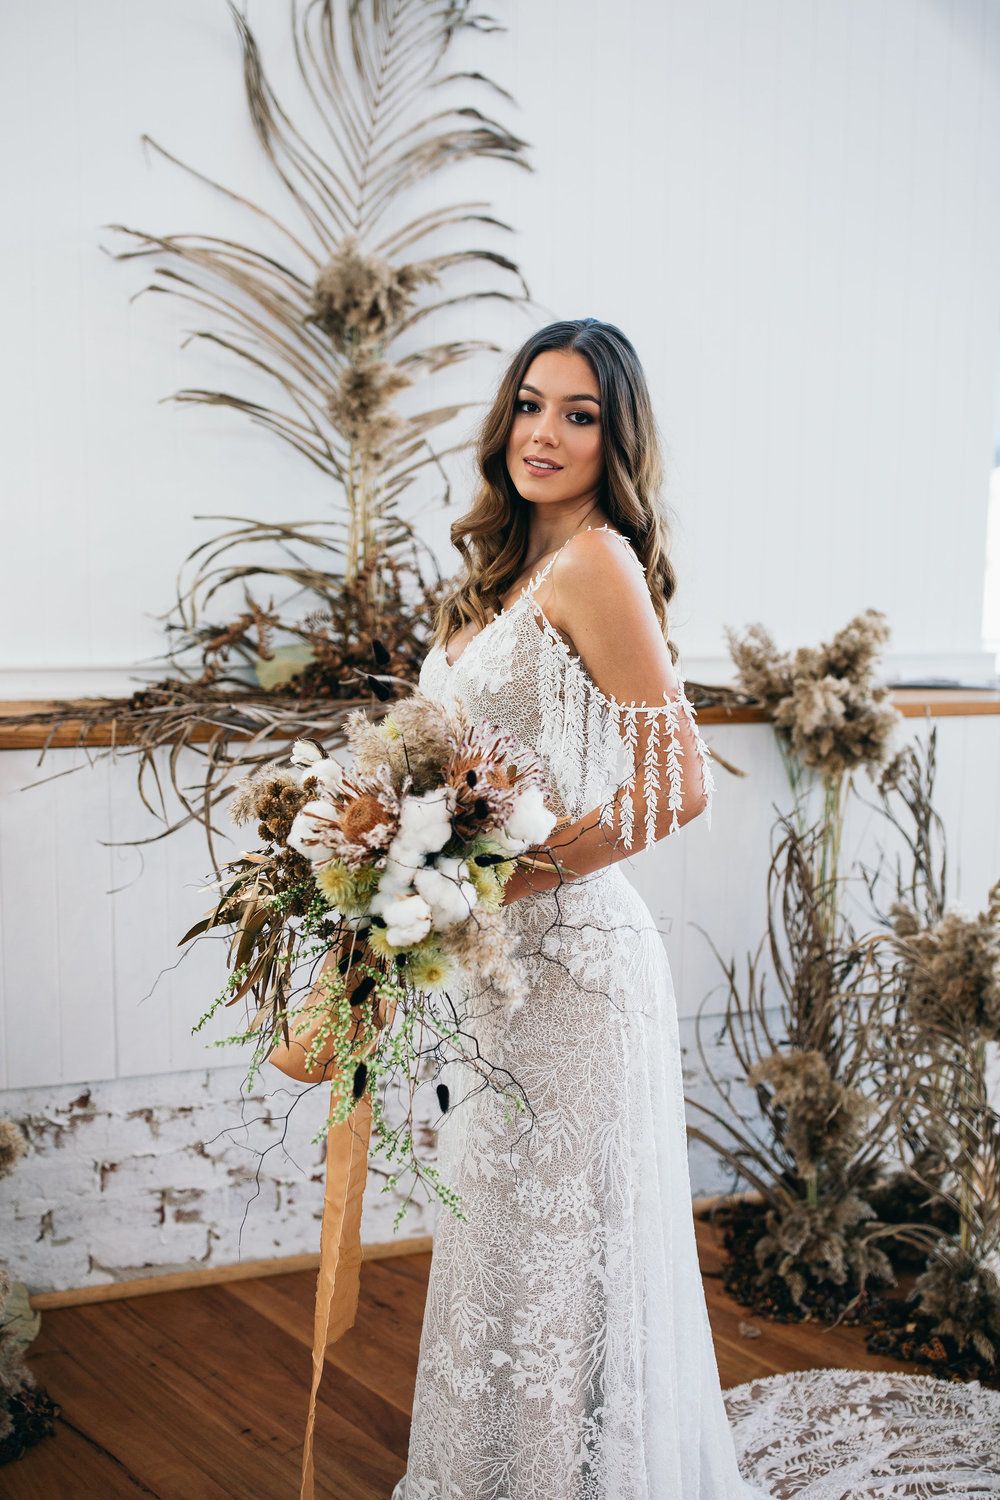 Autumn Australia Wedding Inspiration with Dried Palms & Pears ⋆ Ruffled